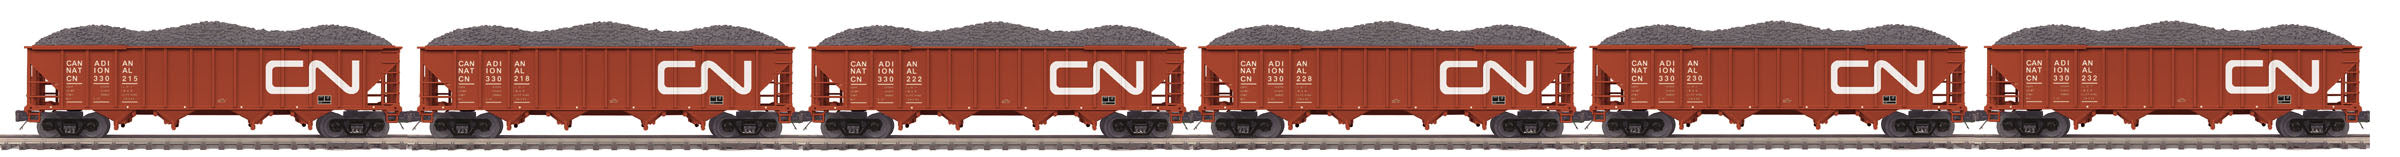 Railking Coal Hopper Freight Cars